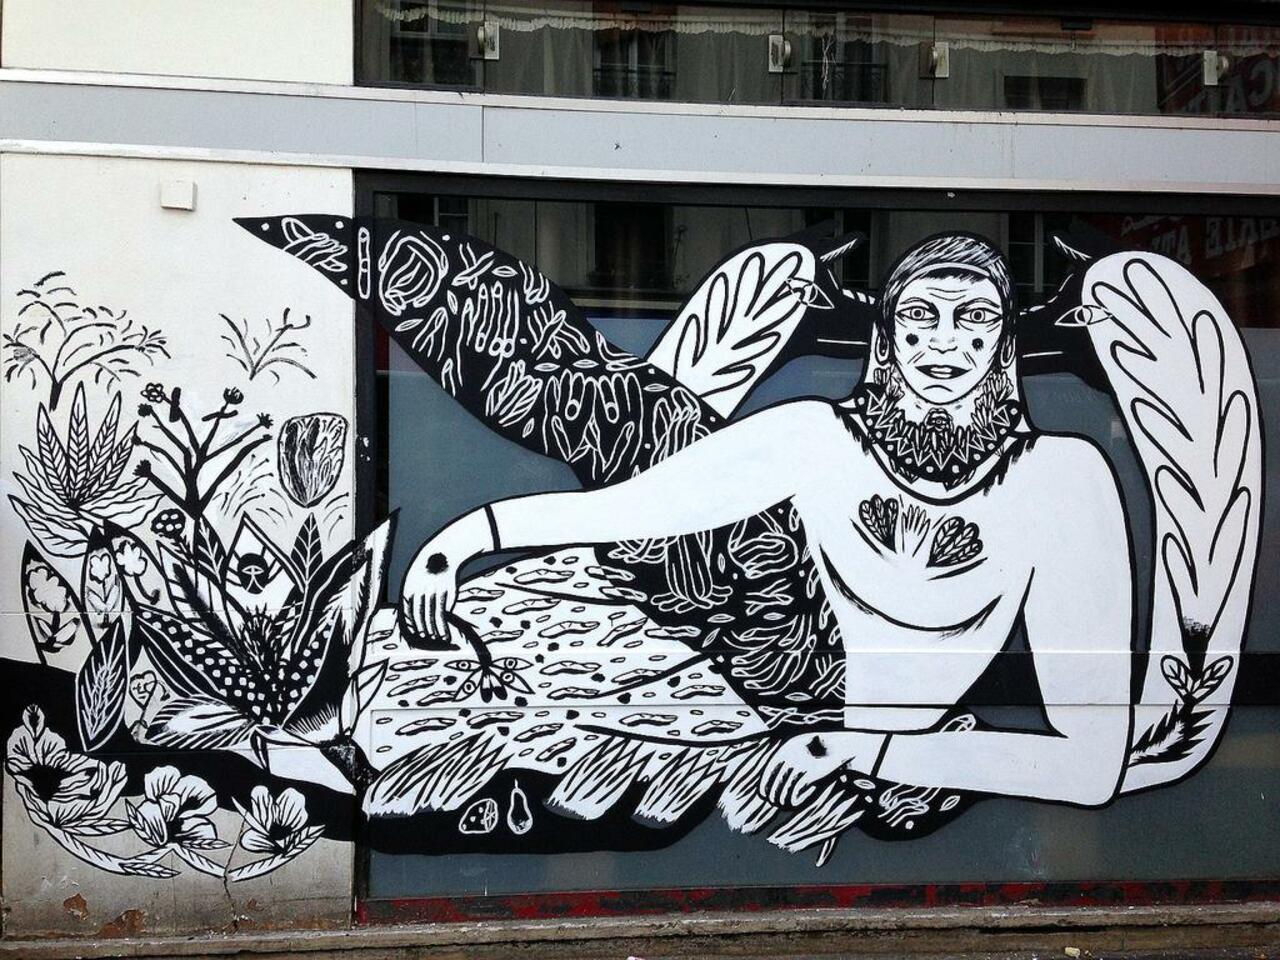 Street Art by Katjastroph in #Paris http://www.urbacolors.com #art #mural #graffiti #streetart http://t.co/gI64I4cymr